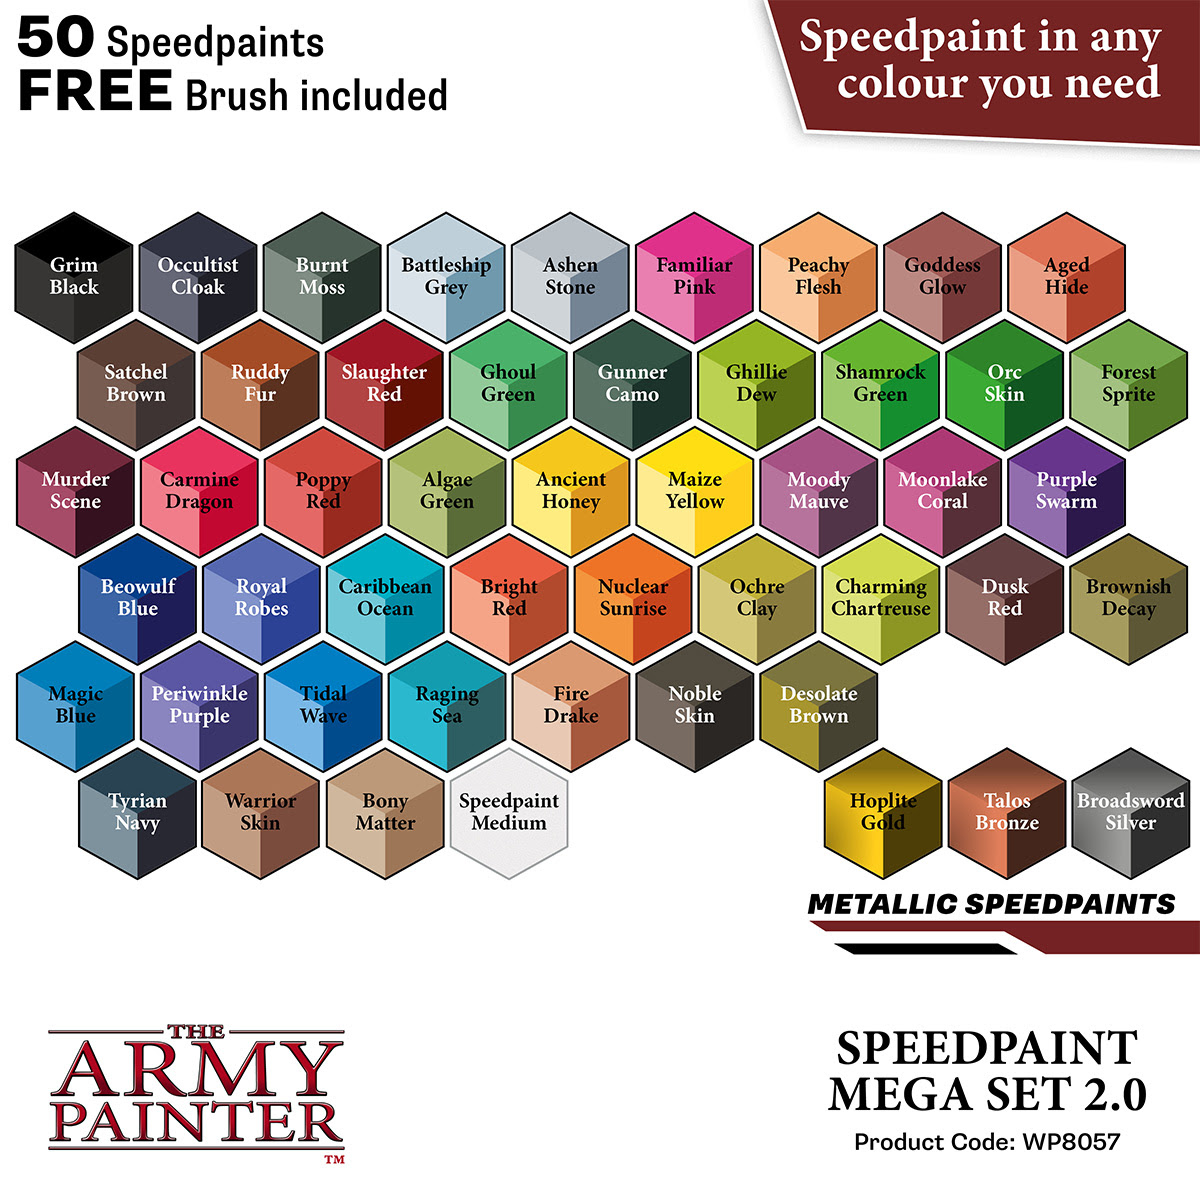 The Army Painter Speedpaint 2.0 Complete Set